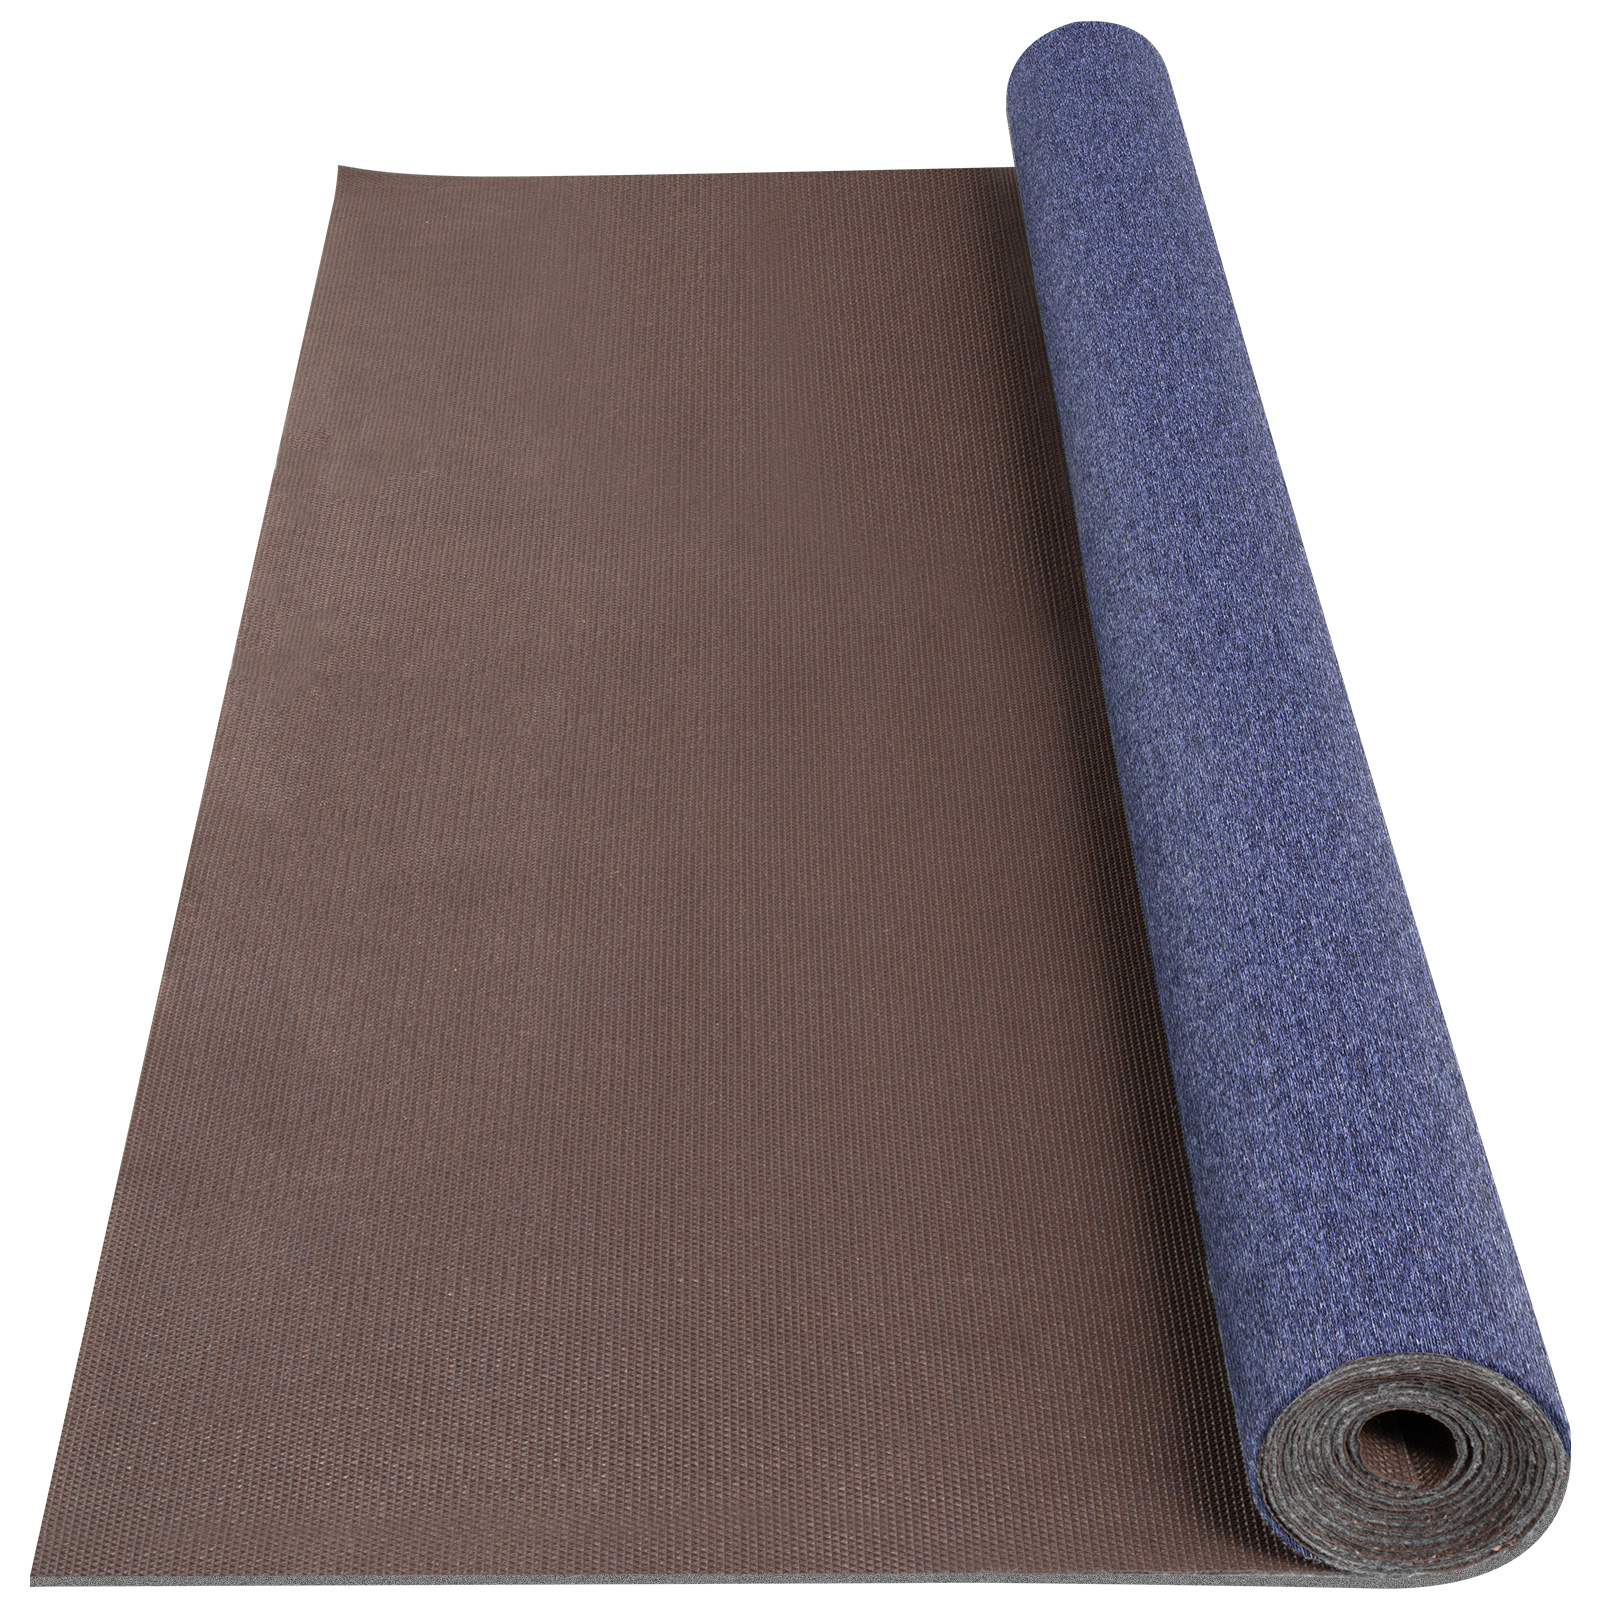 32 OZ Bass Boat Carpet Cutpile Marine Carpet In/Outdoor Patio Area Rug 6x49.2ft 